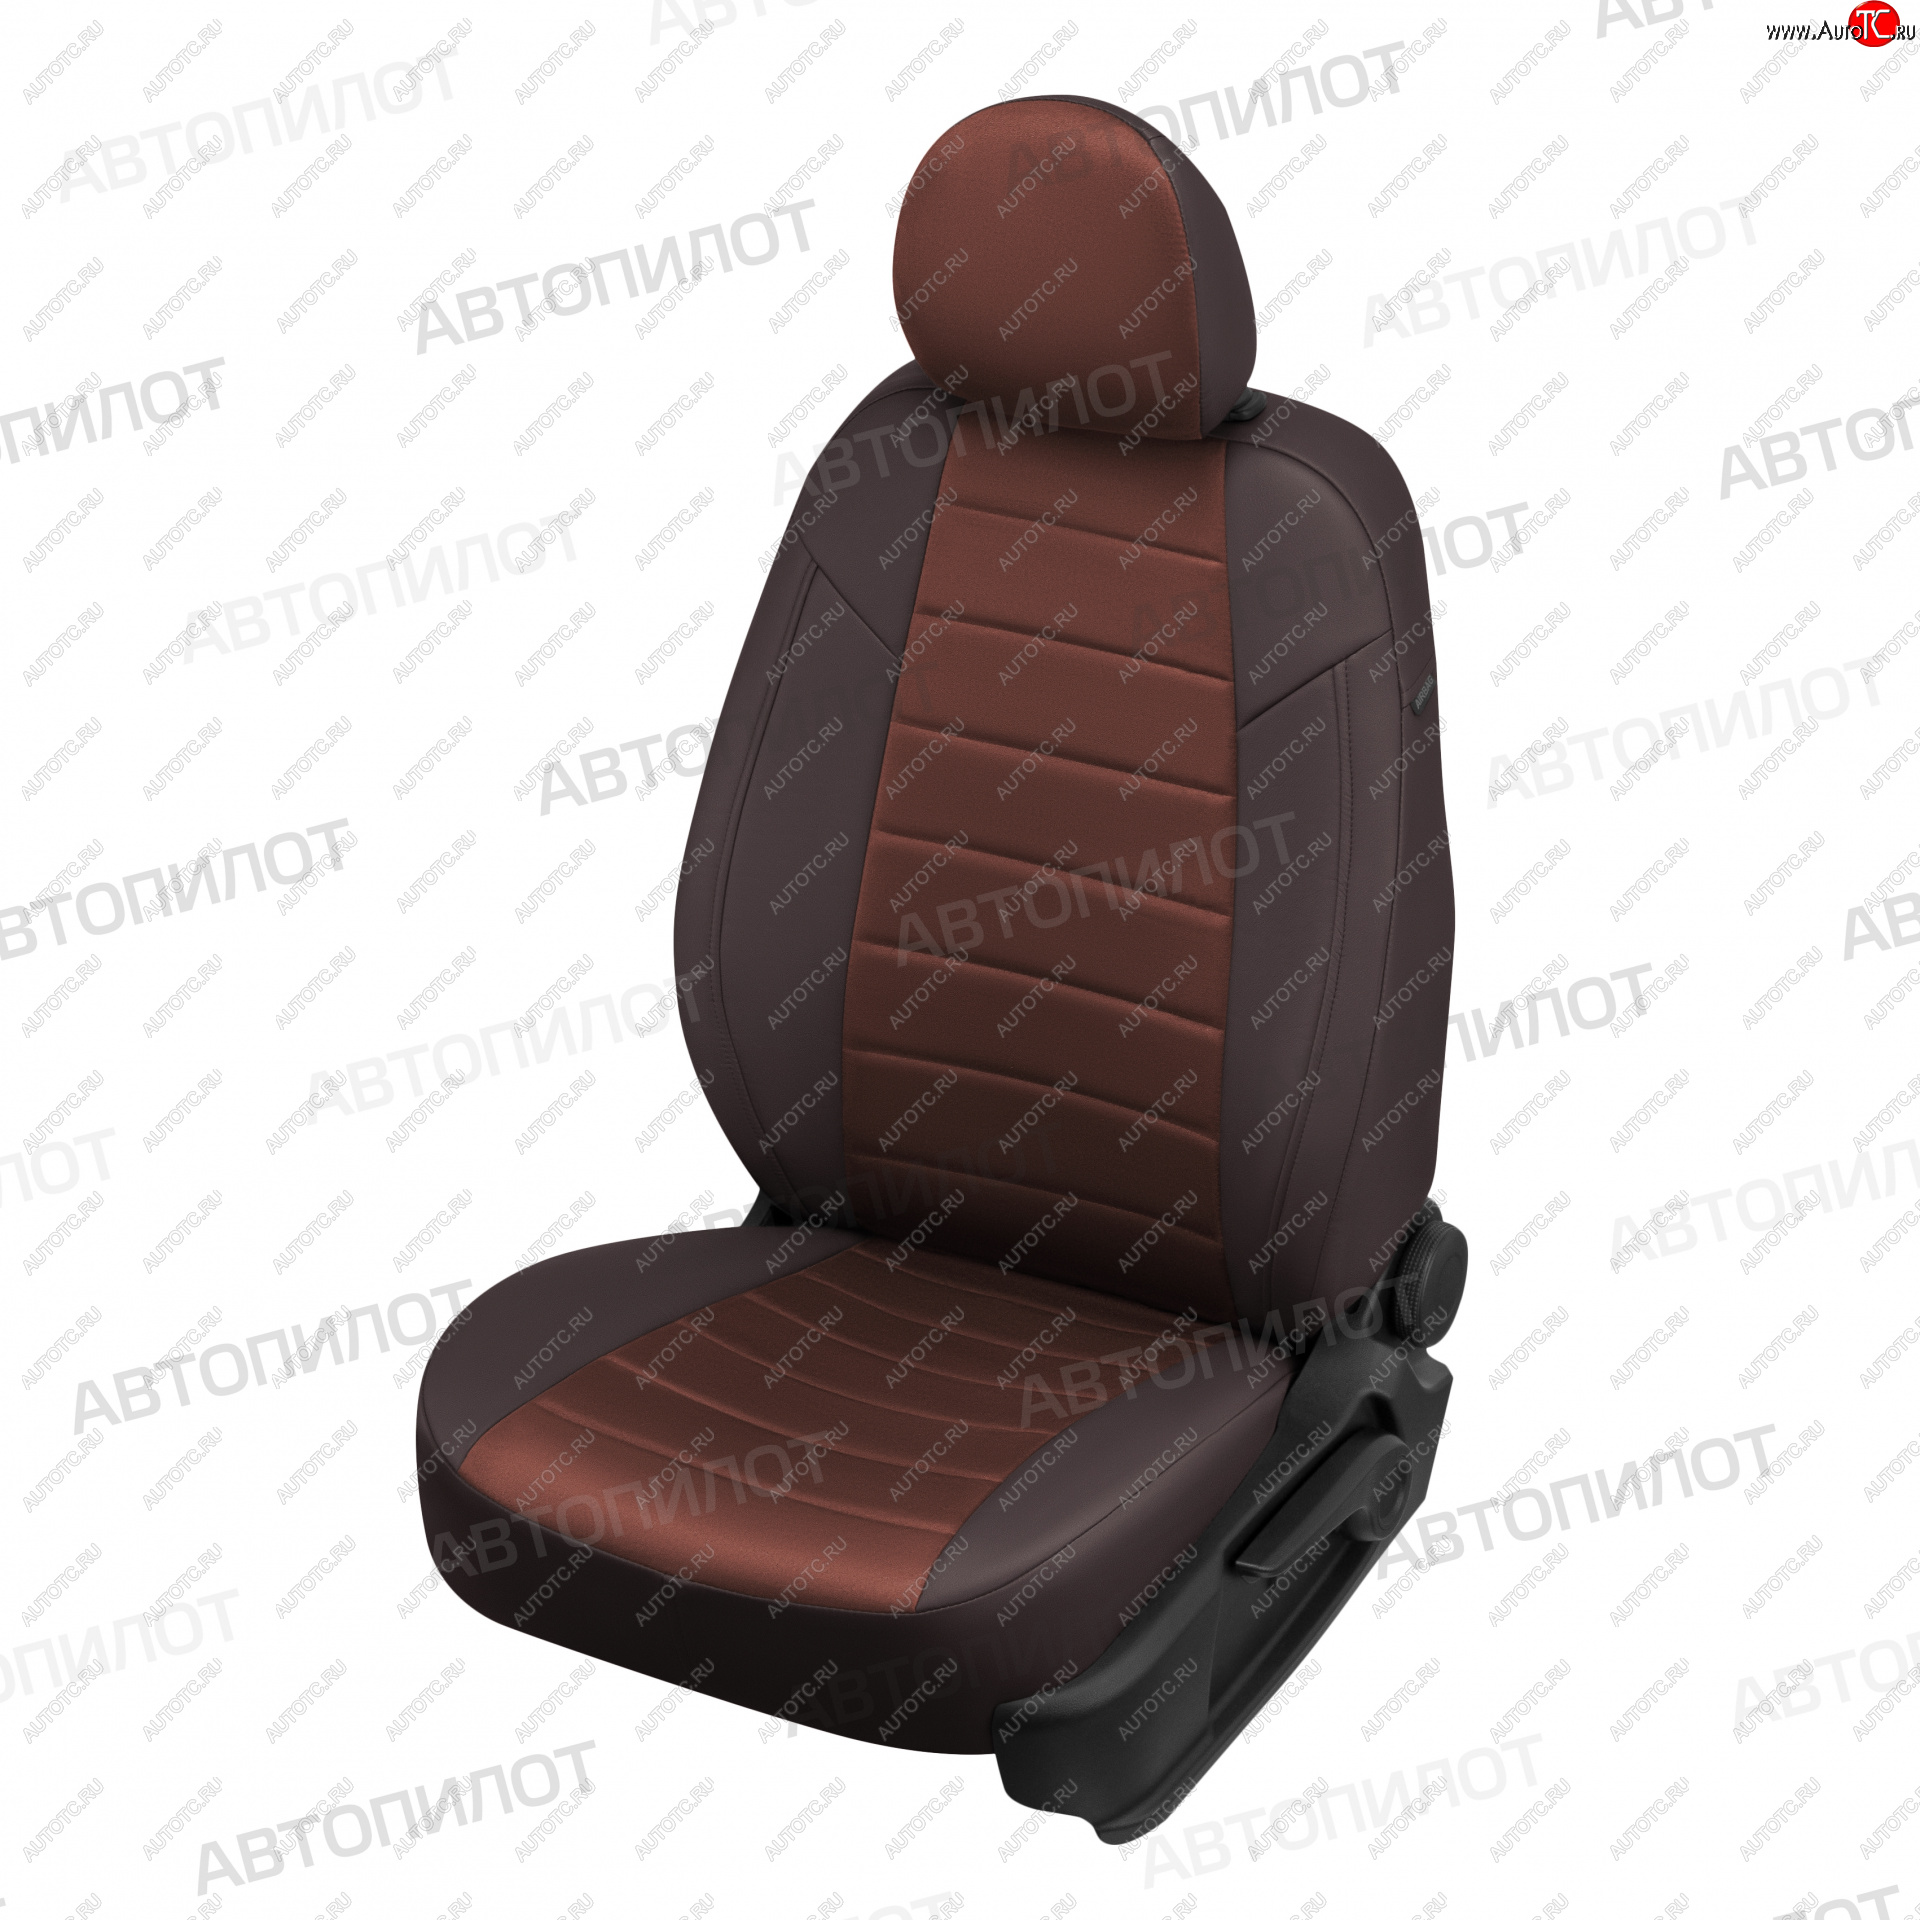 13 849 р. Чехлы сидений (Titanium, экокожа/алькантара) Автопилот  Ford Kuga  1 (2008-2013) (шоколад)